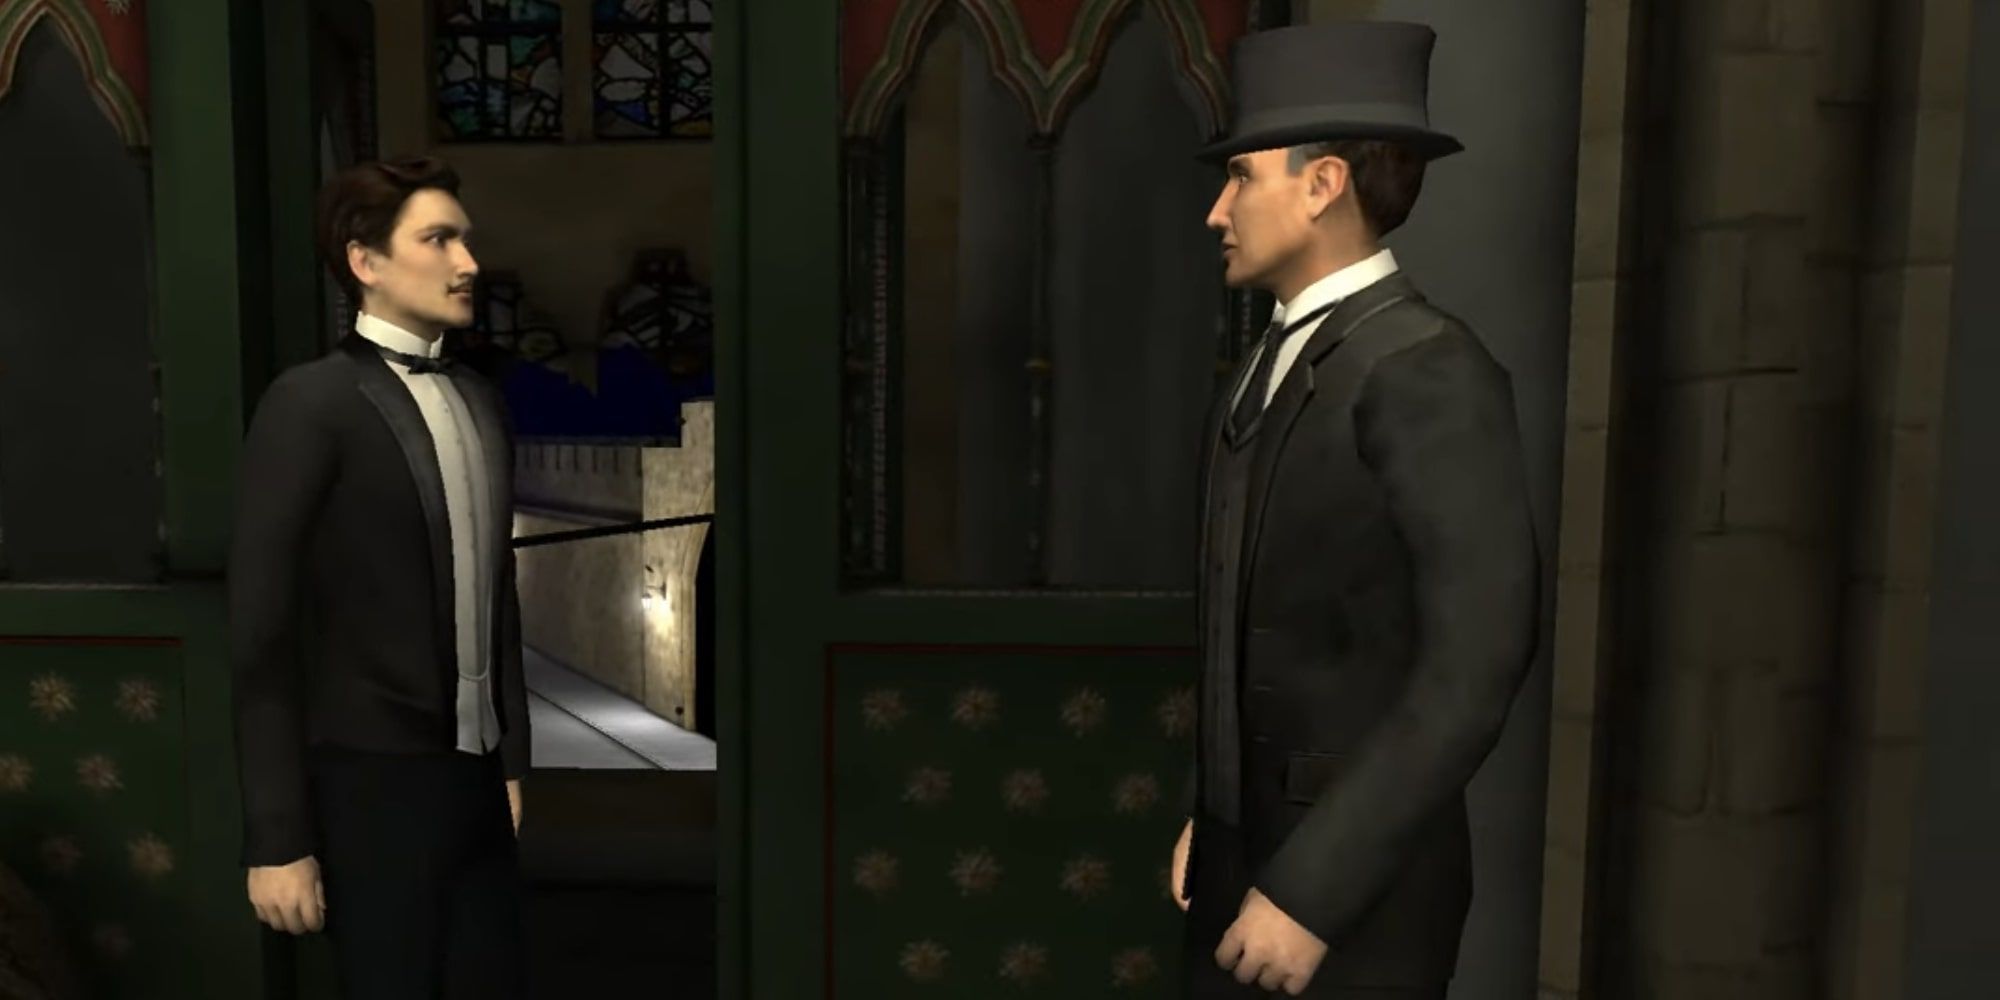 Sherlock Holmes Versus Arsene Lupin Holmes confronts Lupin